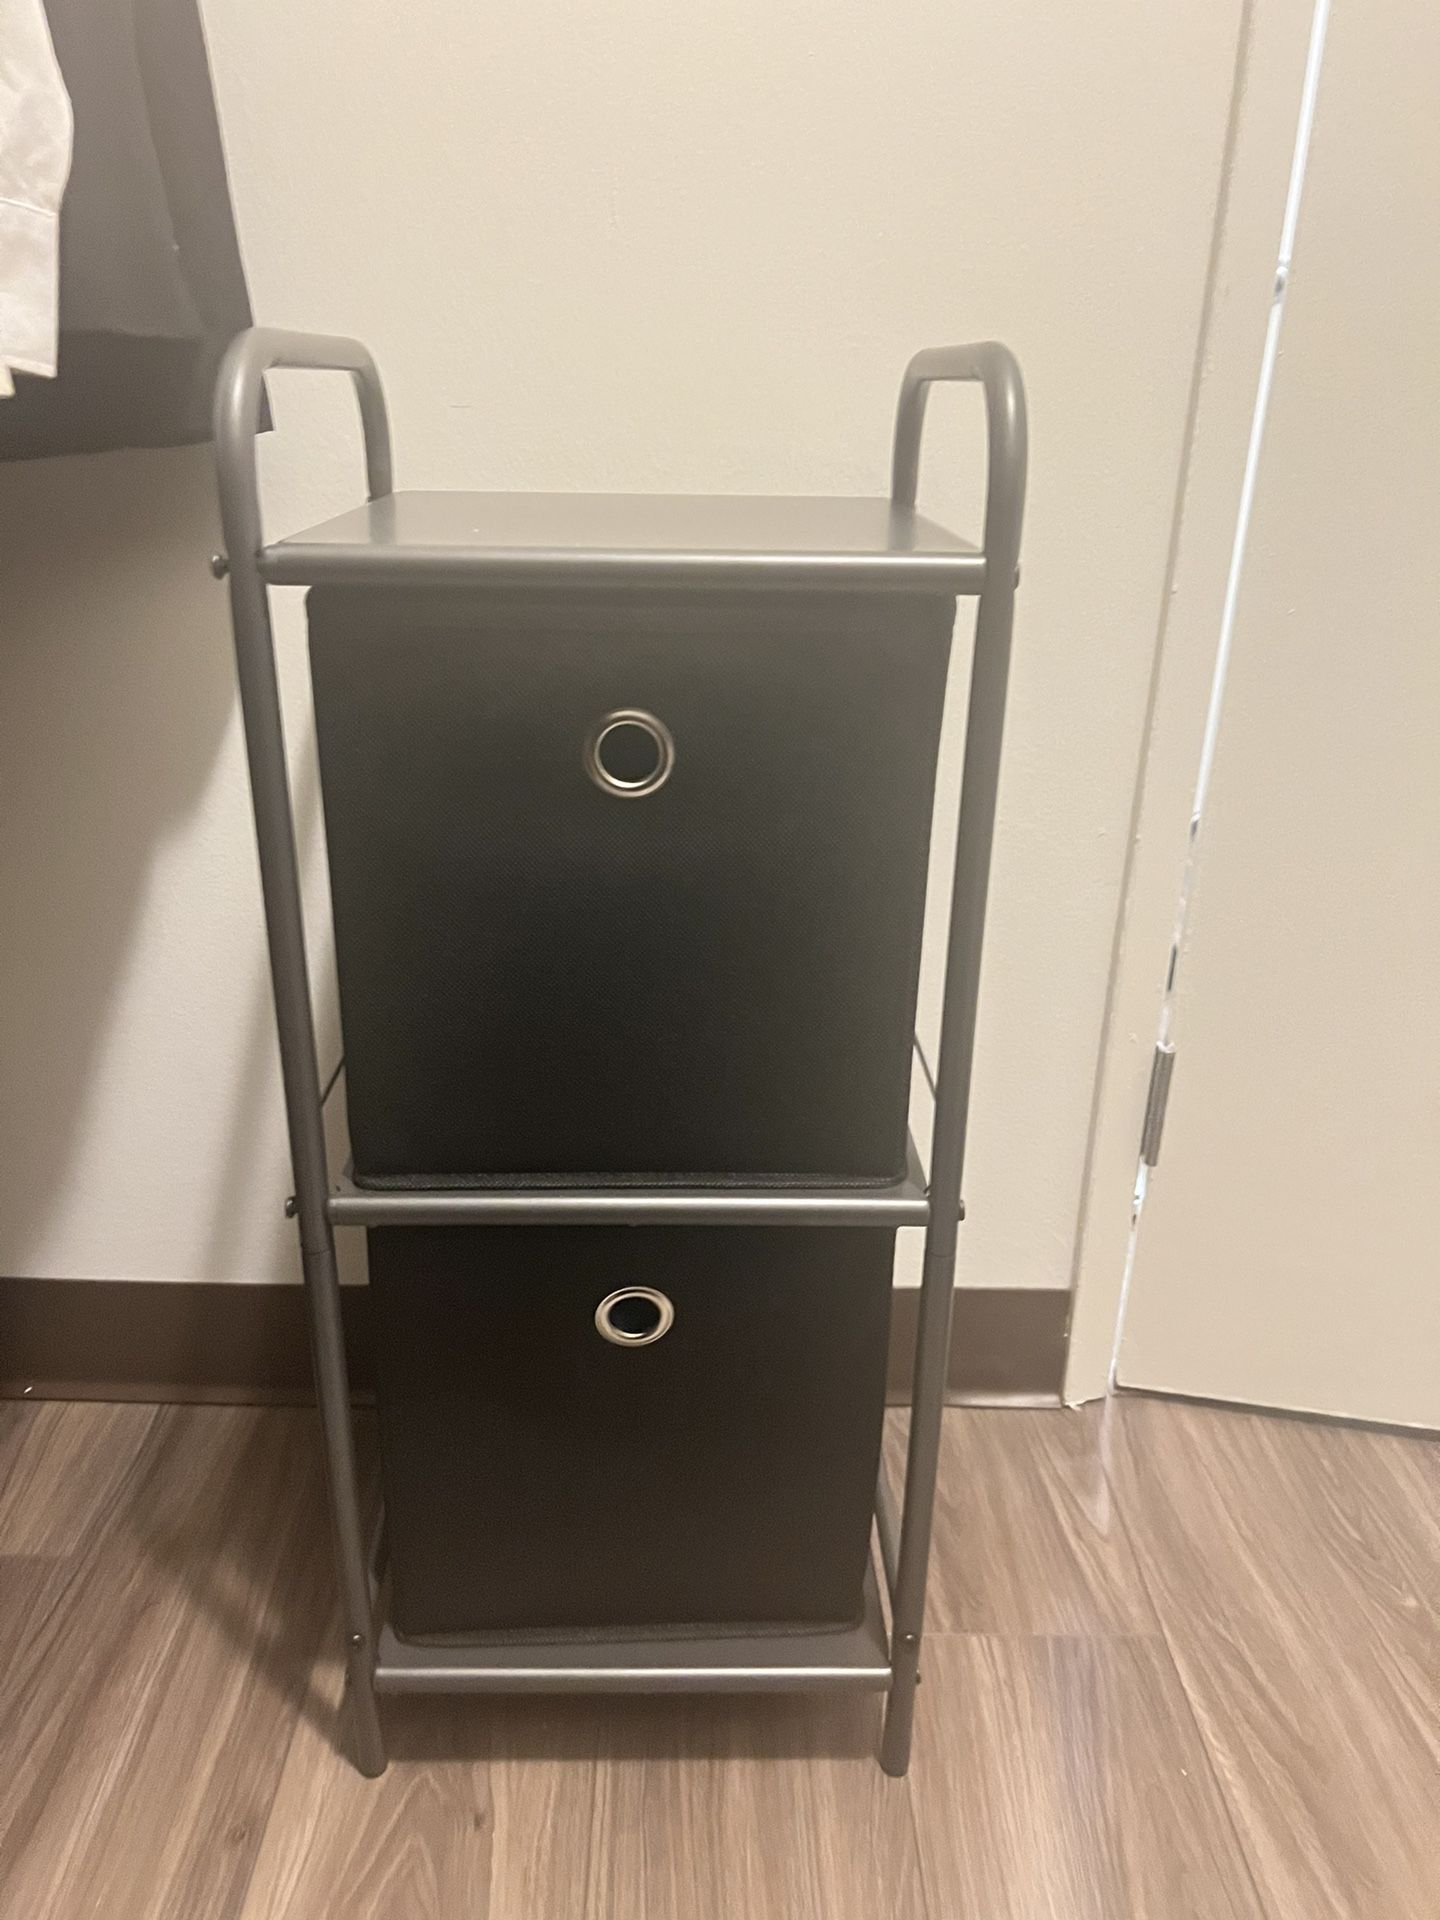 Standing Drawer Storage With Bins